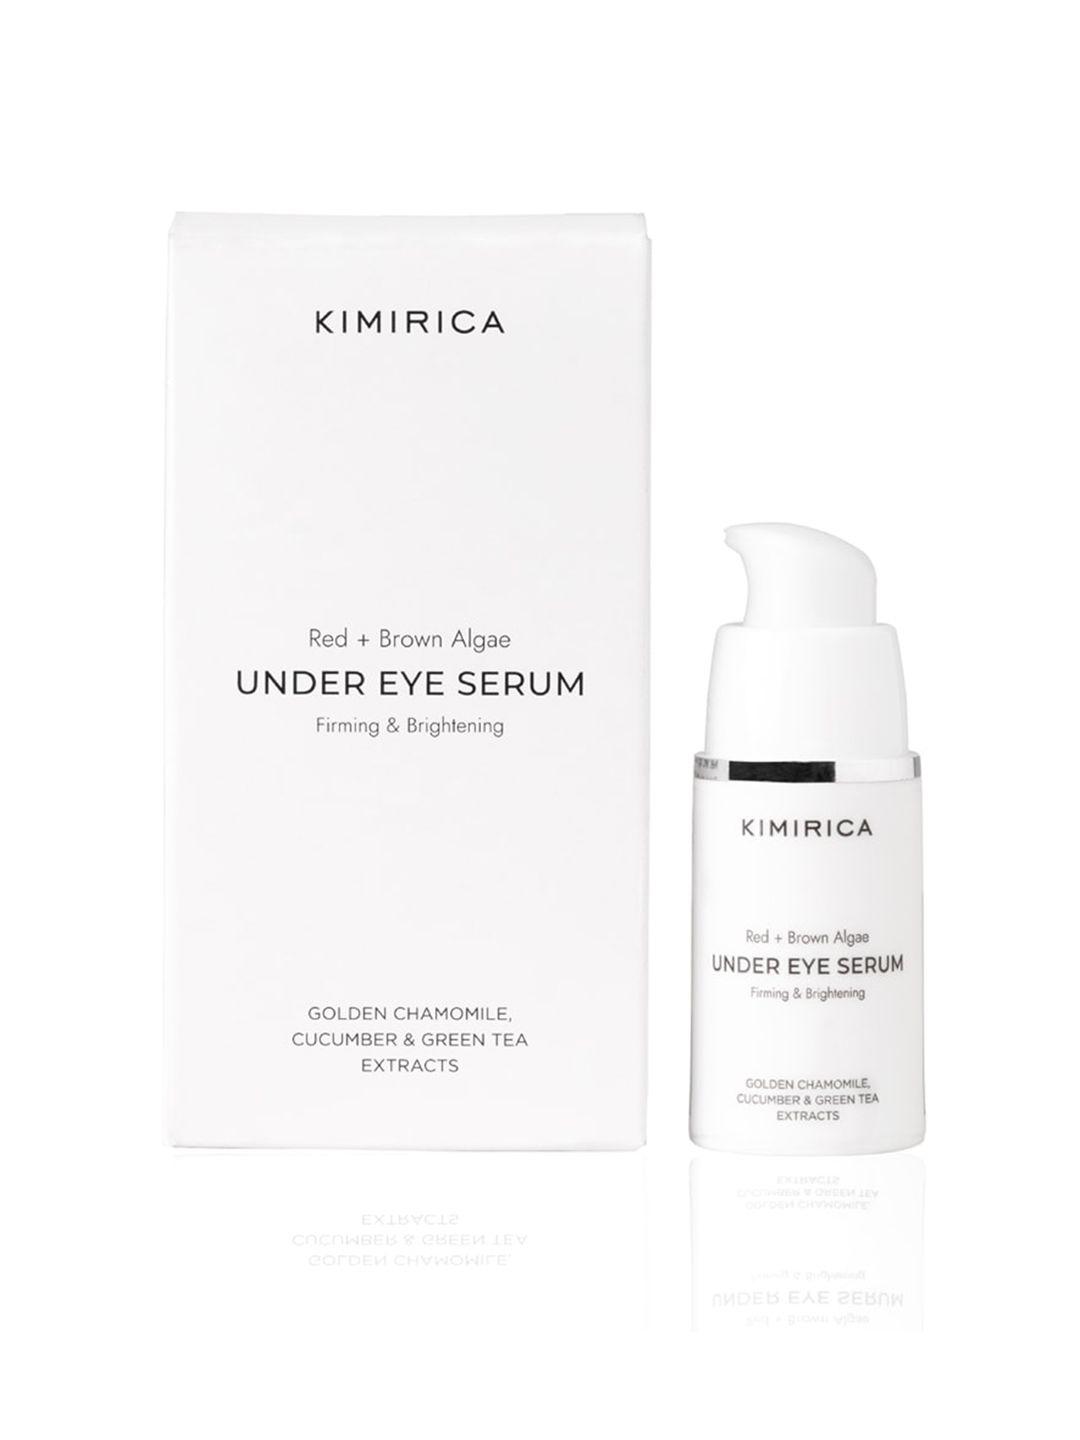 kimirica golden chamomile cucumber & green tea extracts under eye serum - 15 gm